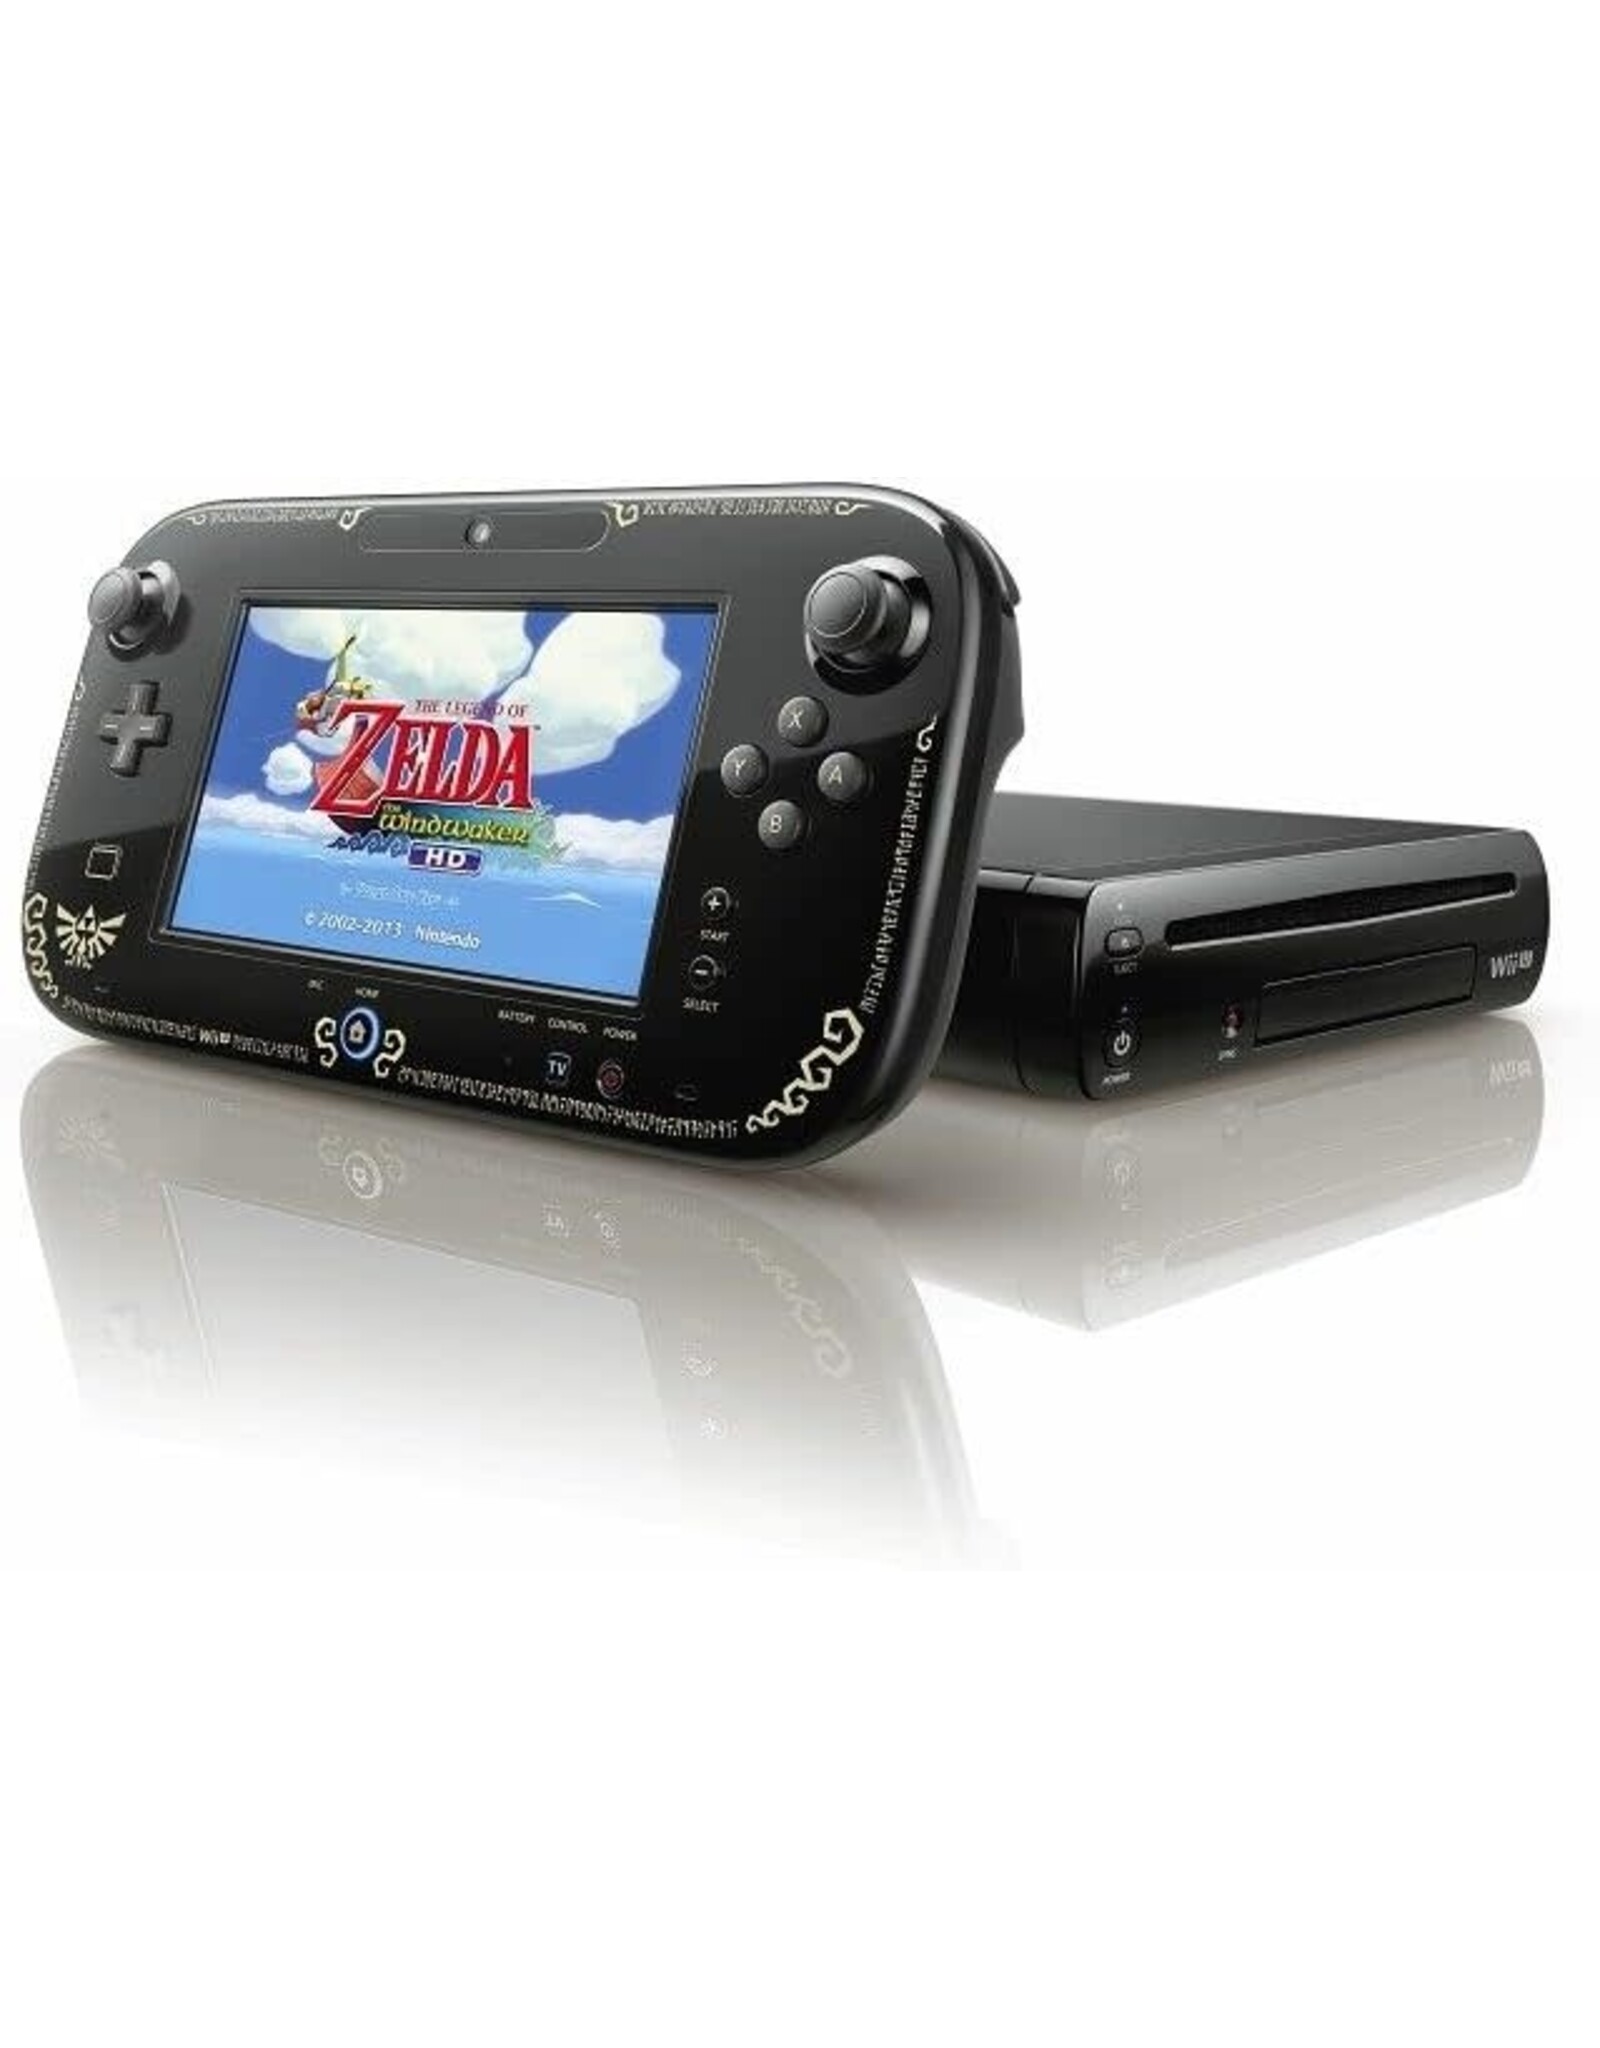 Wii U Wii U Console Zelda Wind Waker Edition 32GB (Used, Cosmetic Damage)